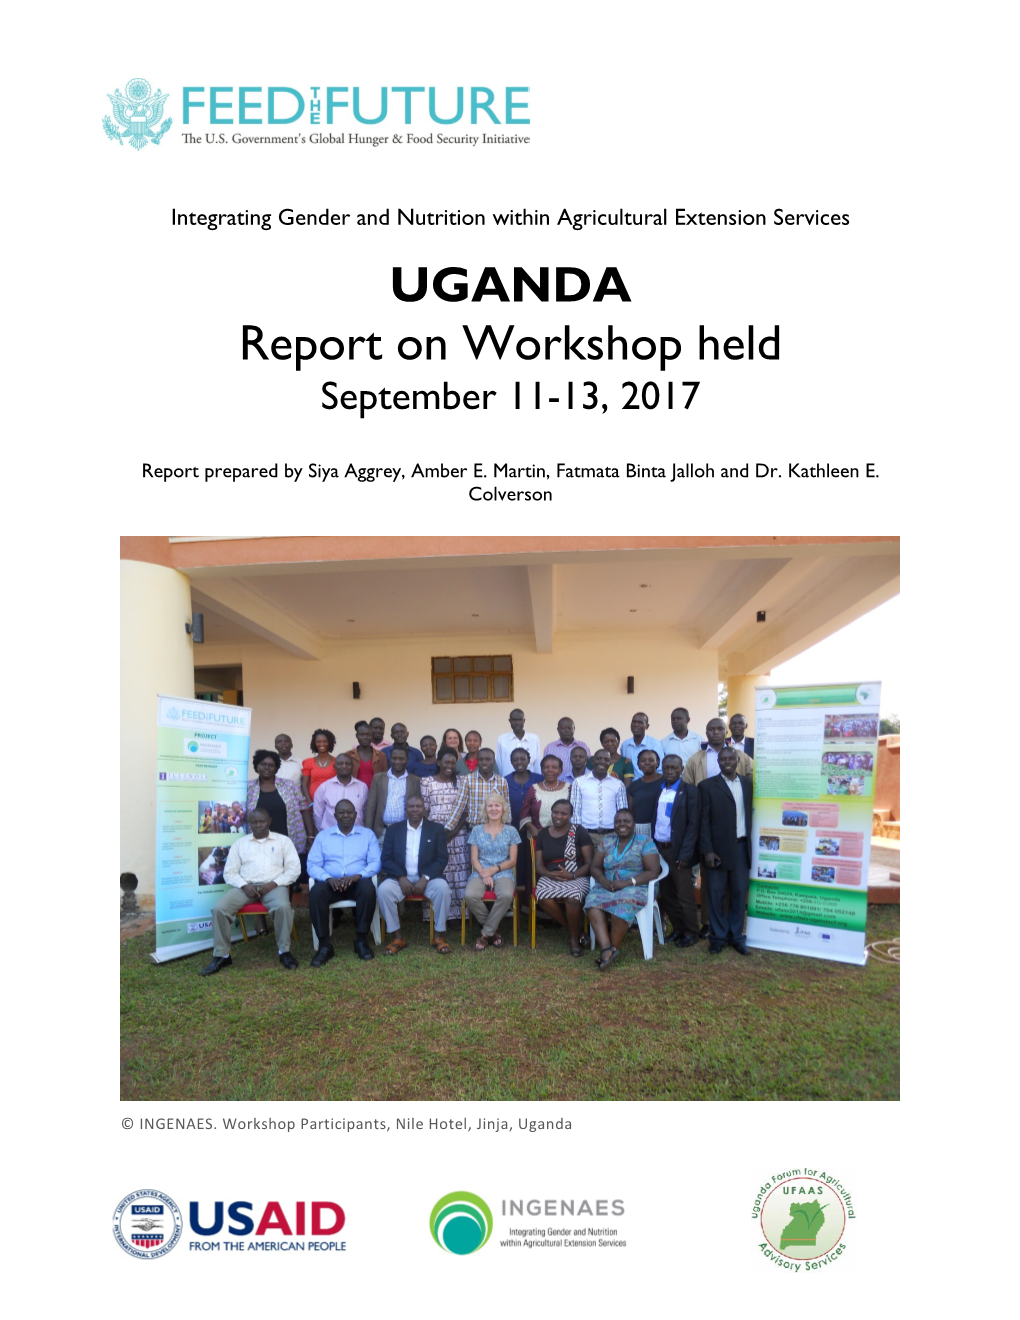 UGANDA Report on Workshop Held September 11-13, 2017